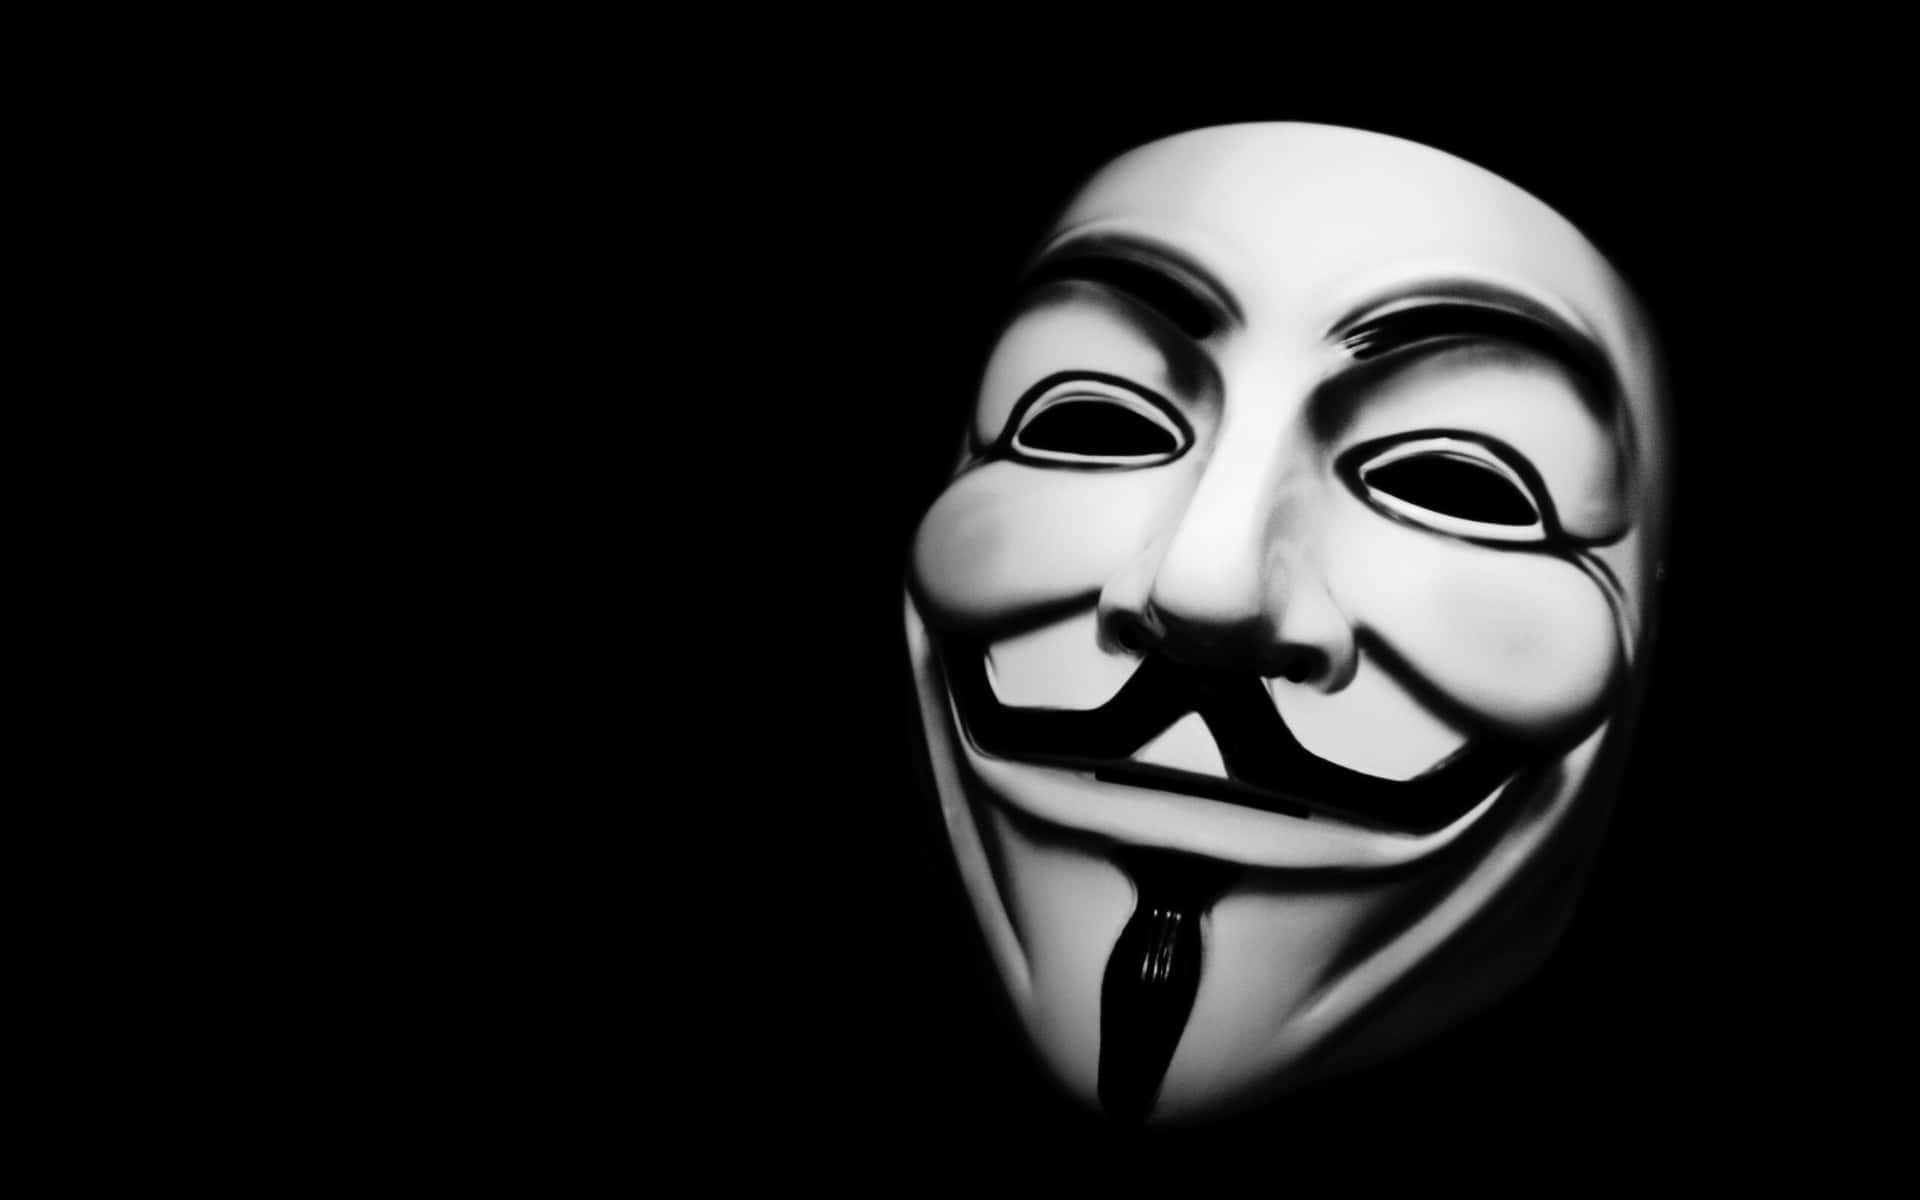 4k Mask Black & White Anonymous Hacker